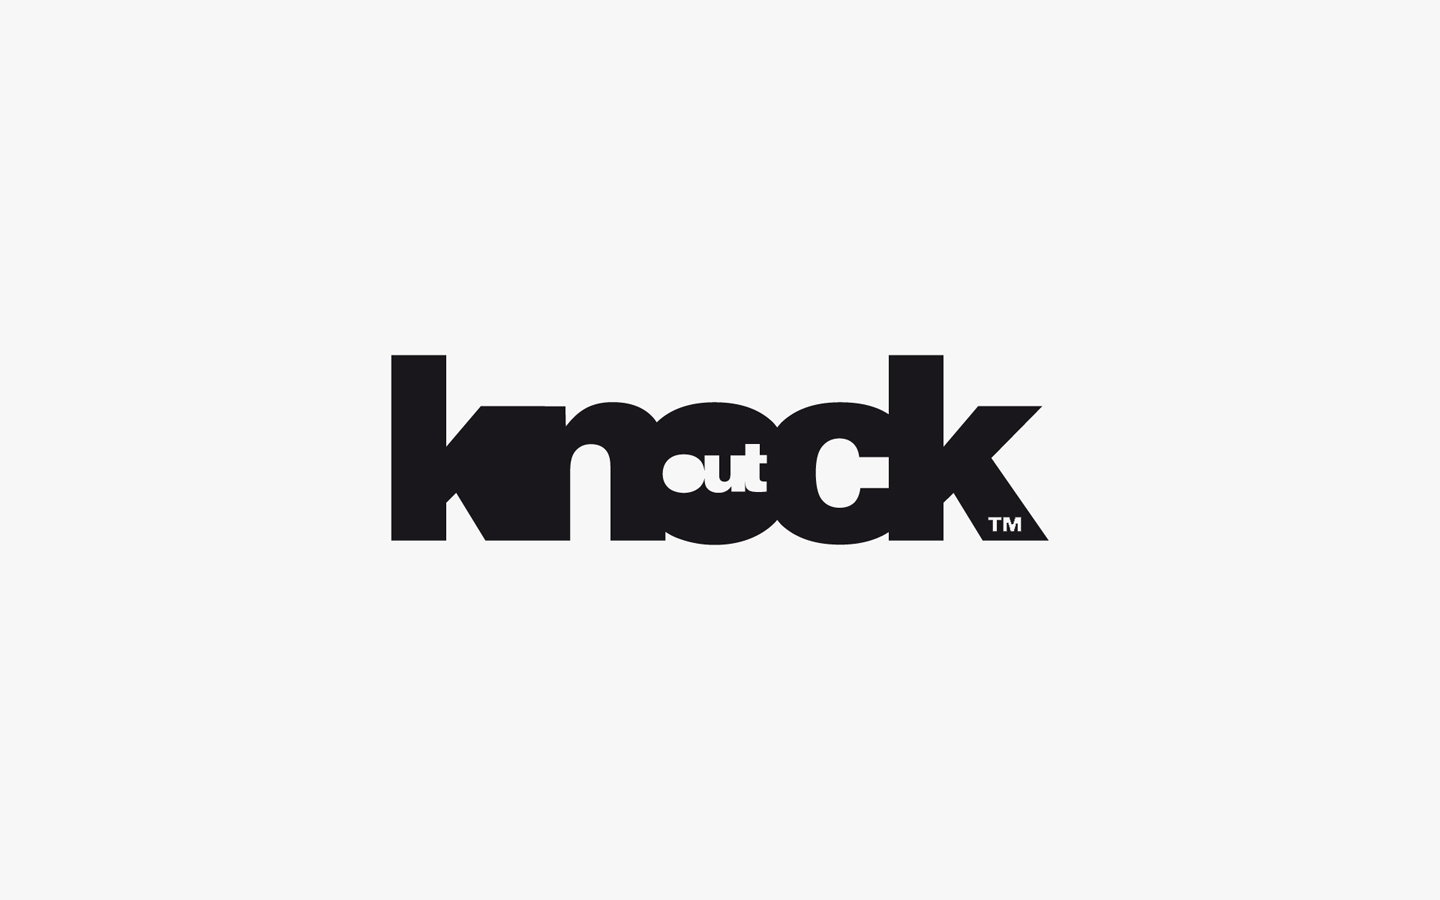 Knock Out Logo Design in Mono